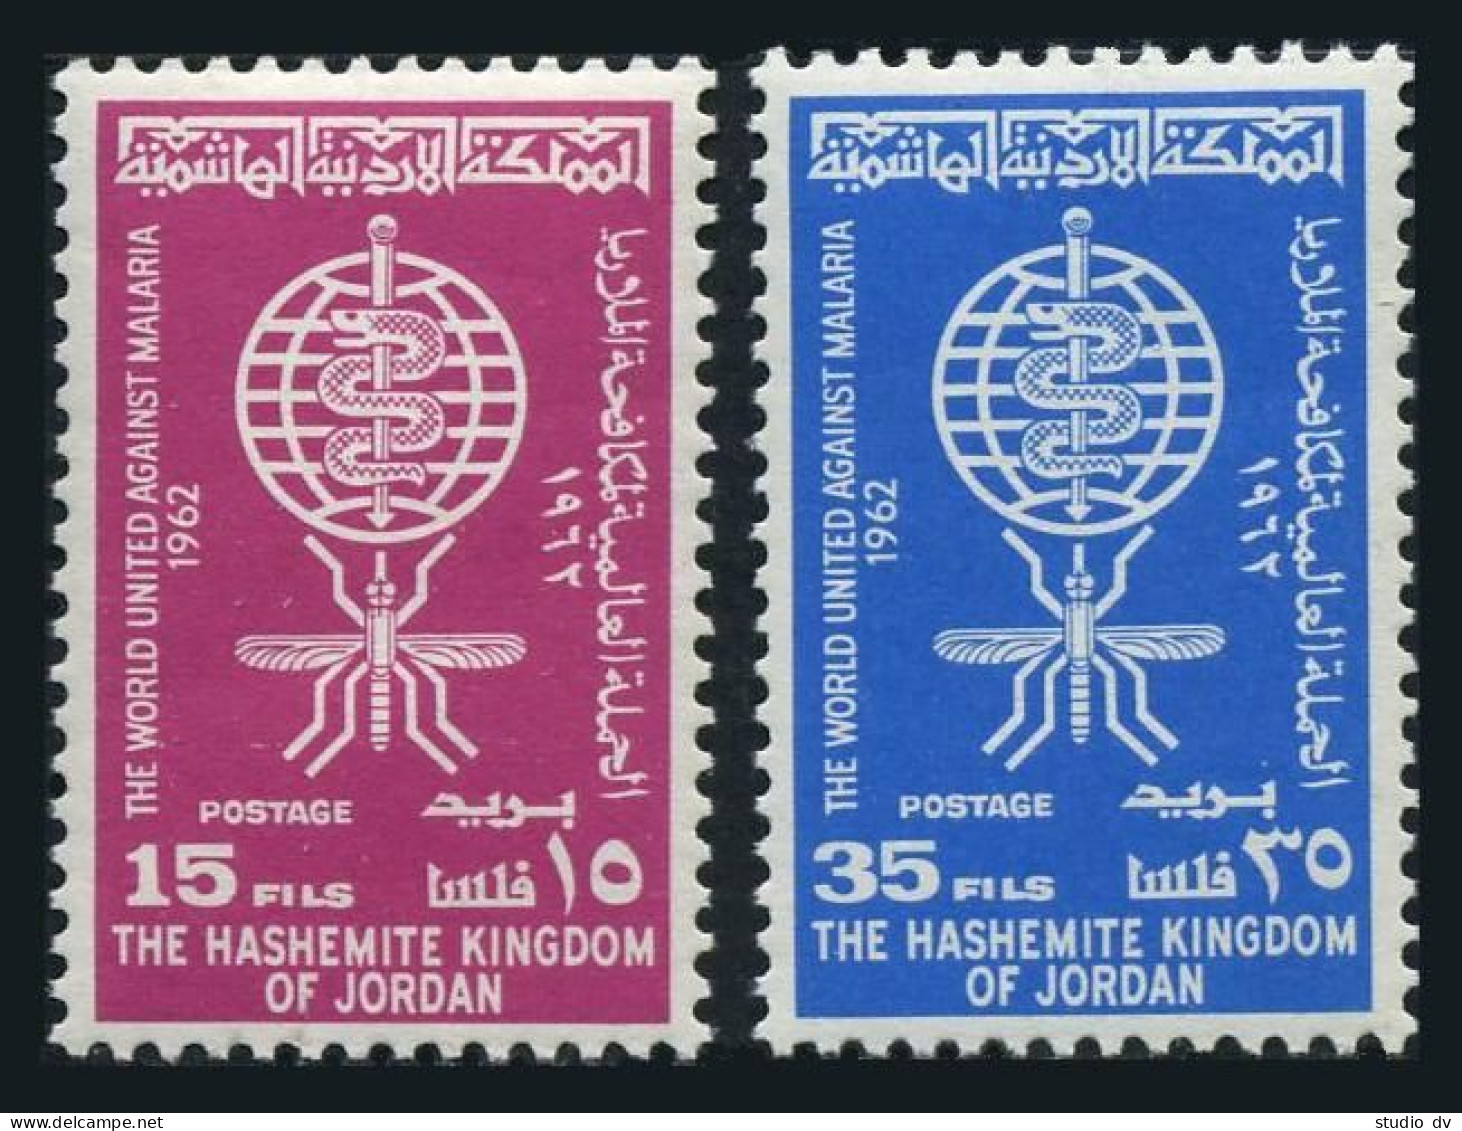 Jordan 379-380,380a & Imperf,MNH. Mi 369-370,Bl.1A-1B. WHO Against Malaria,1962. - Jordanien